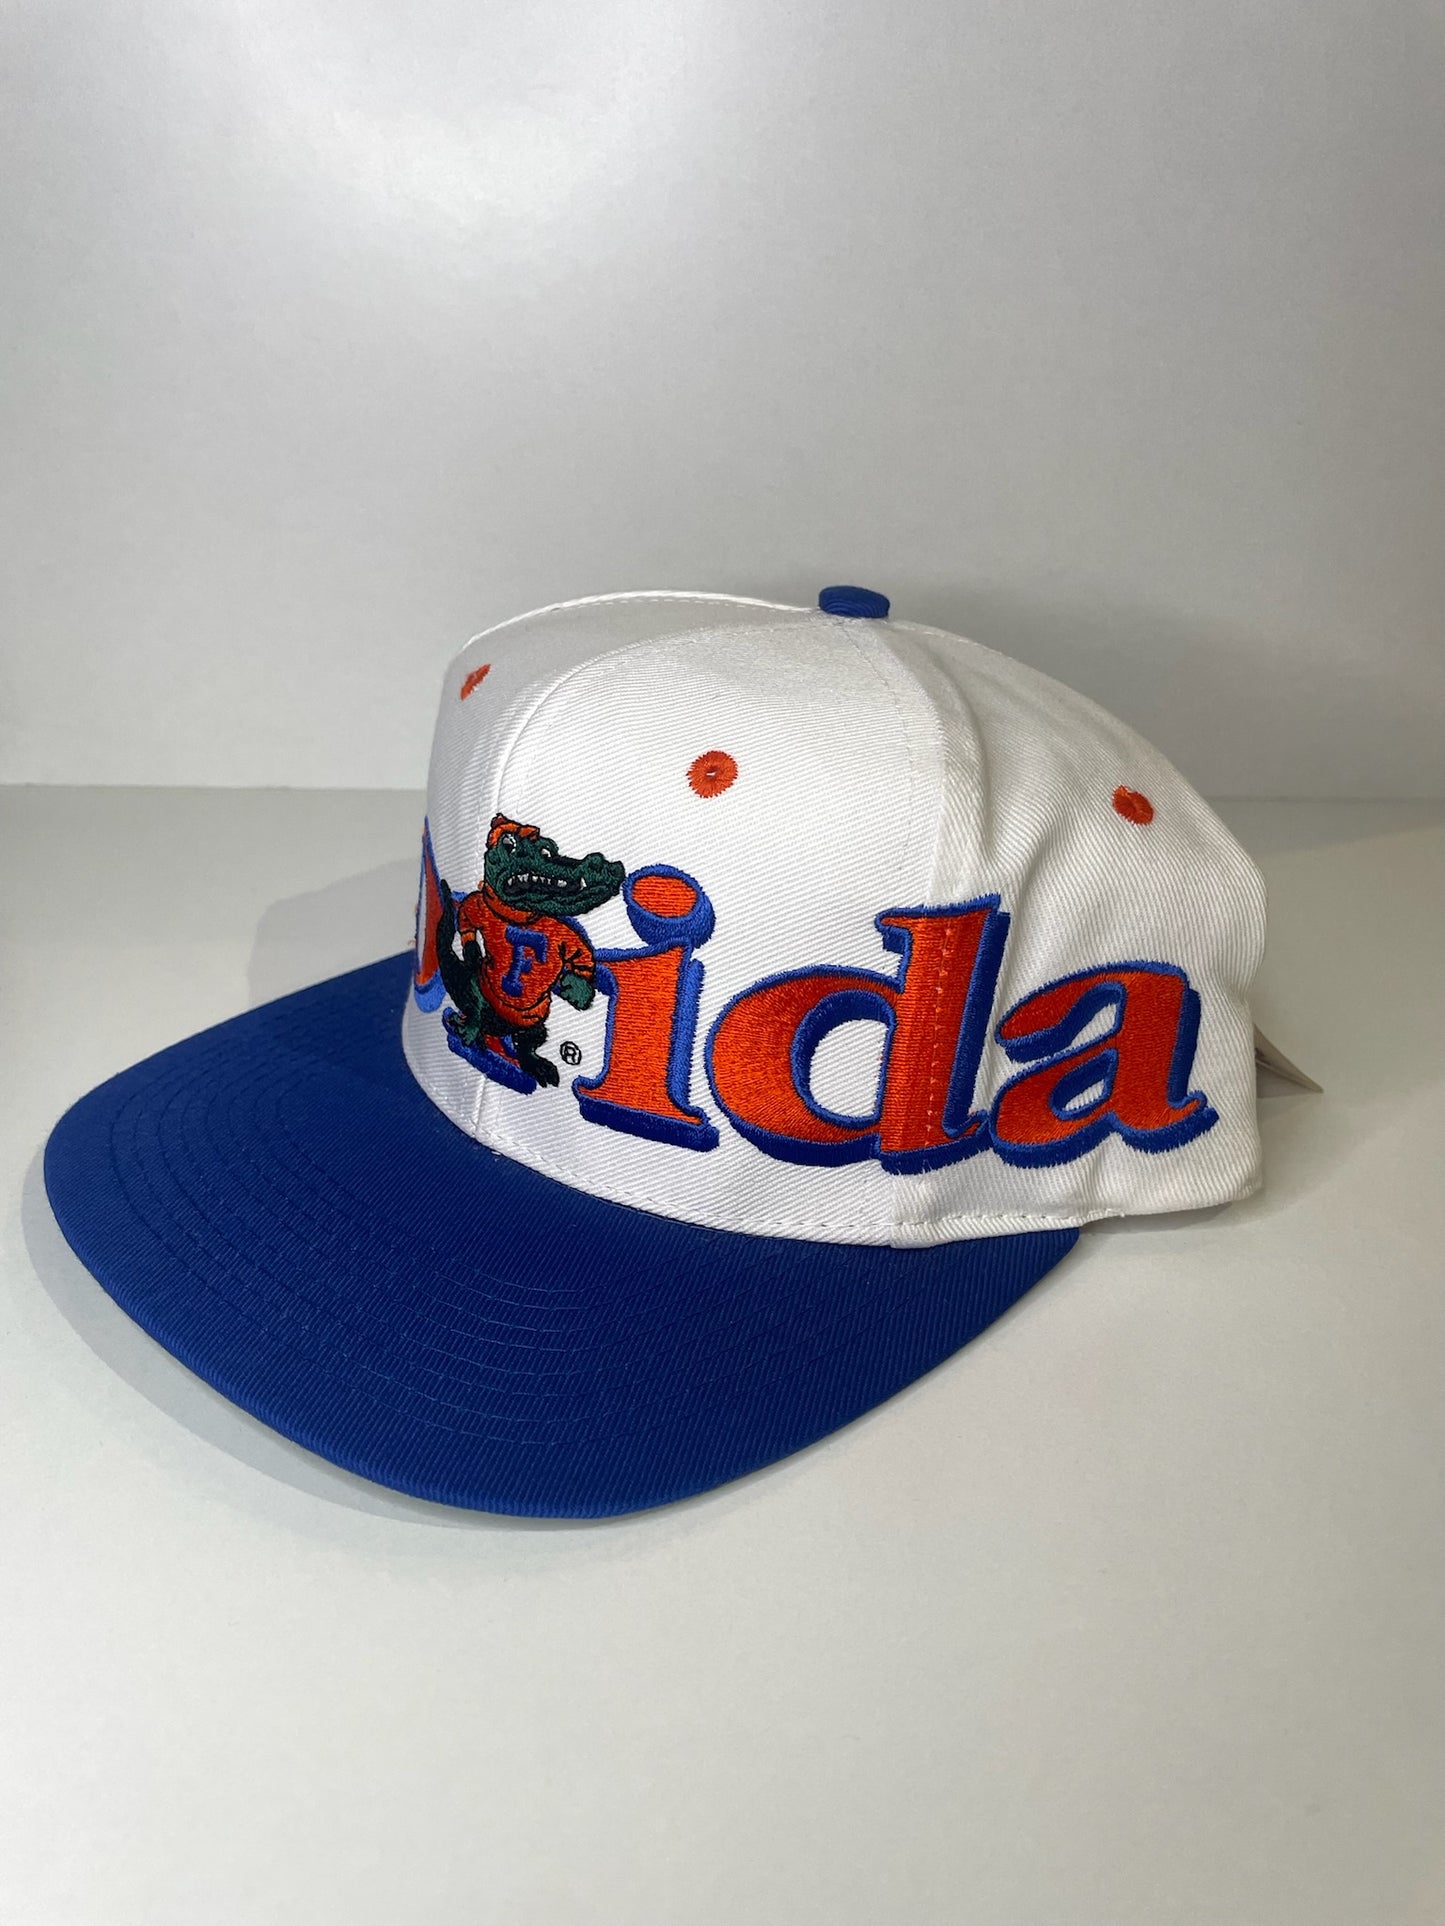 "DS" VINTAGE 90s FLORIDA GATORS LOGO 7 SNAPBACK CAP HAT